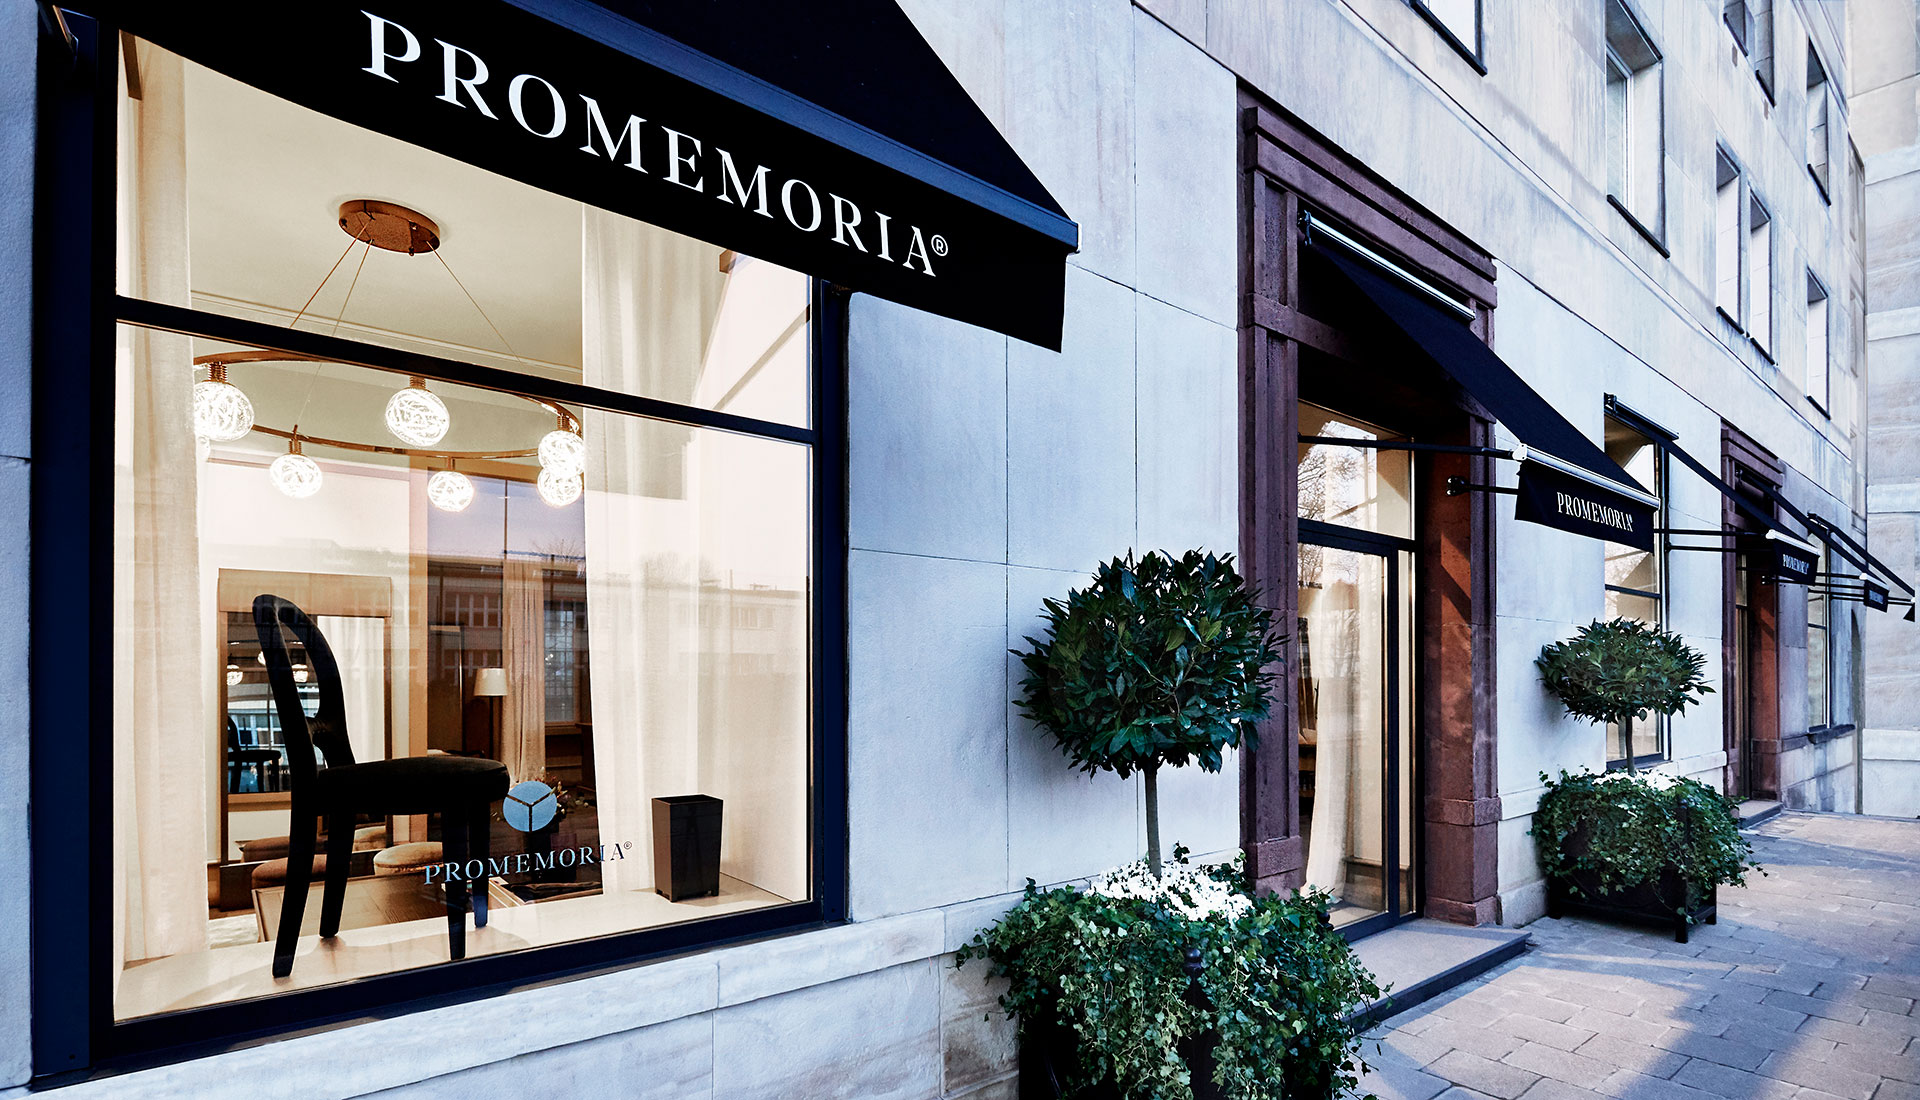 The monobrand showroom Promemoria Warsaw opens in 2019.